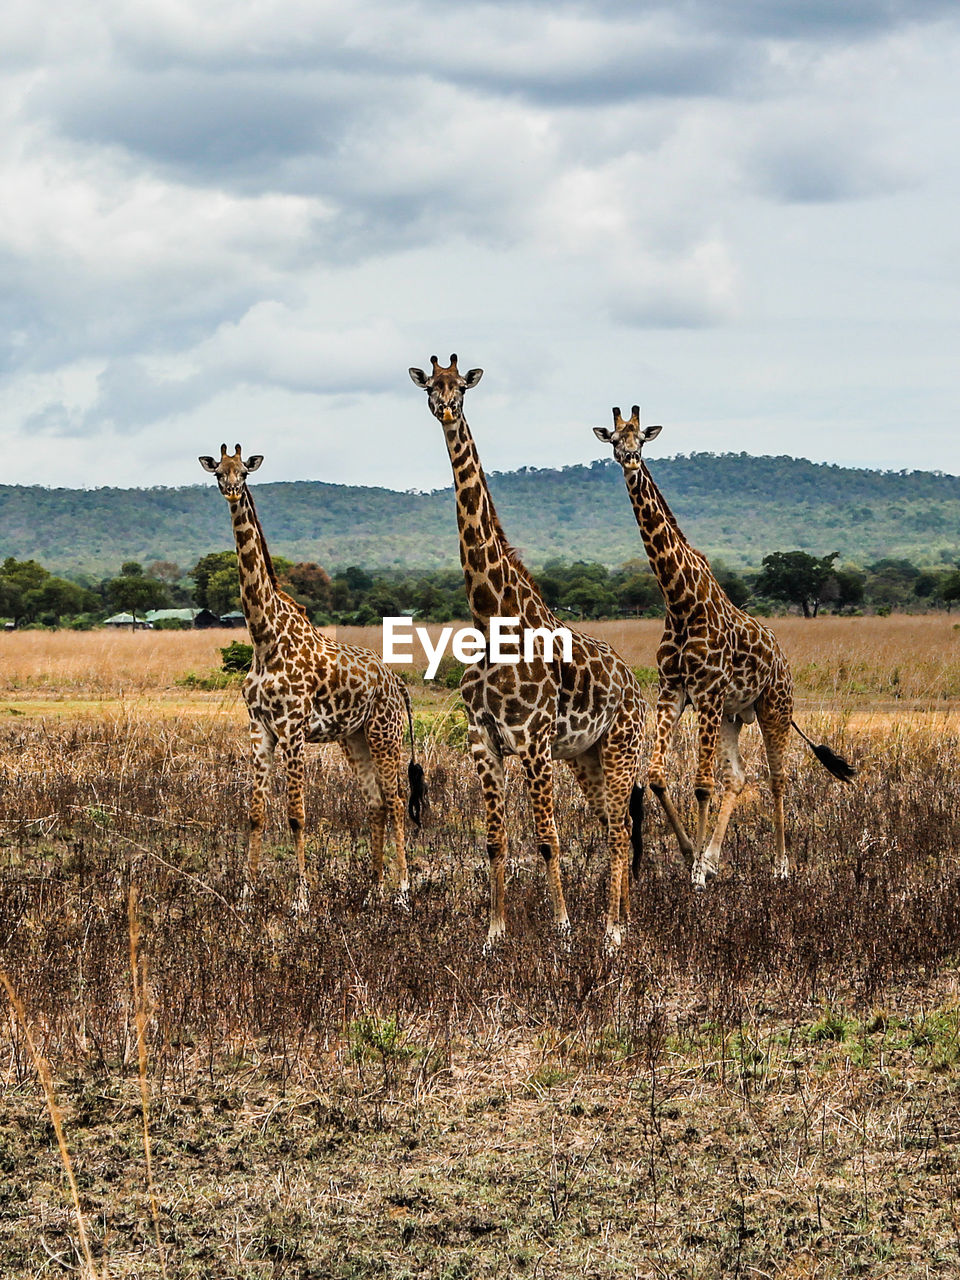 Wild african giraffes in mikumi national park in tanzania in africa on safari